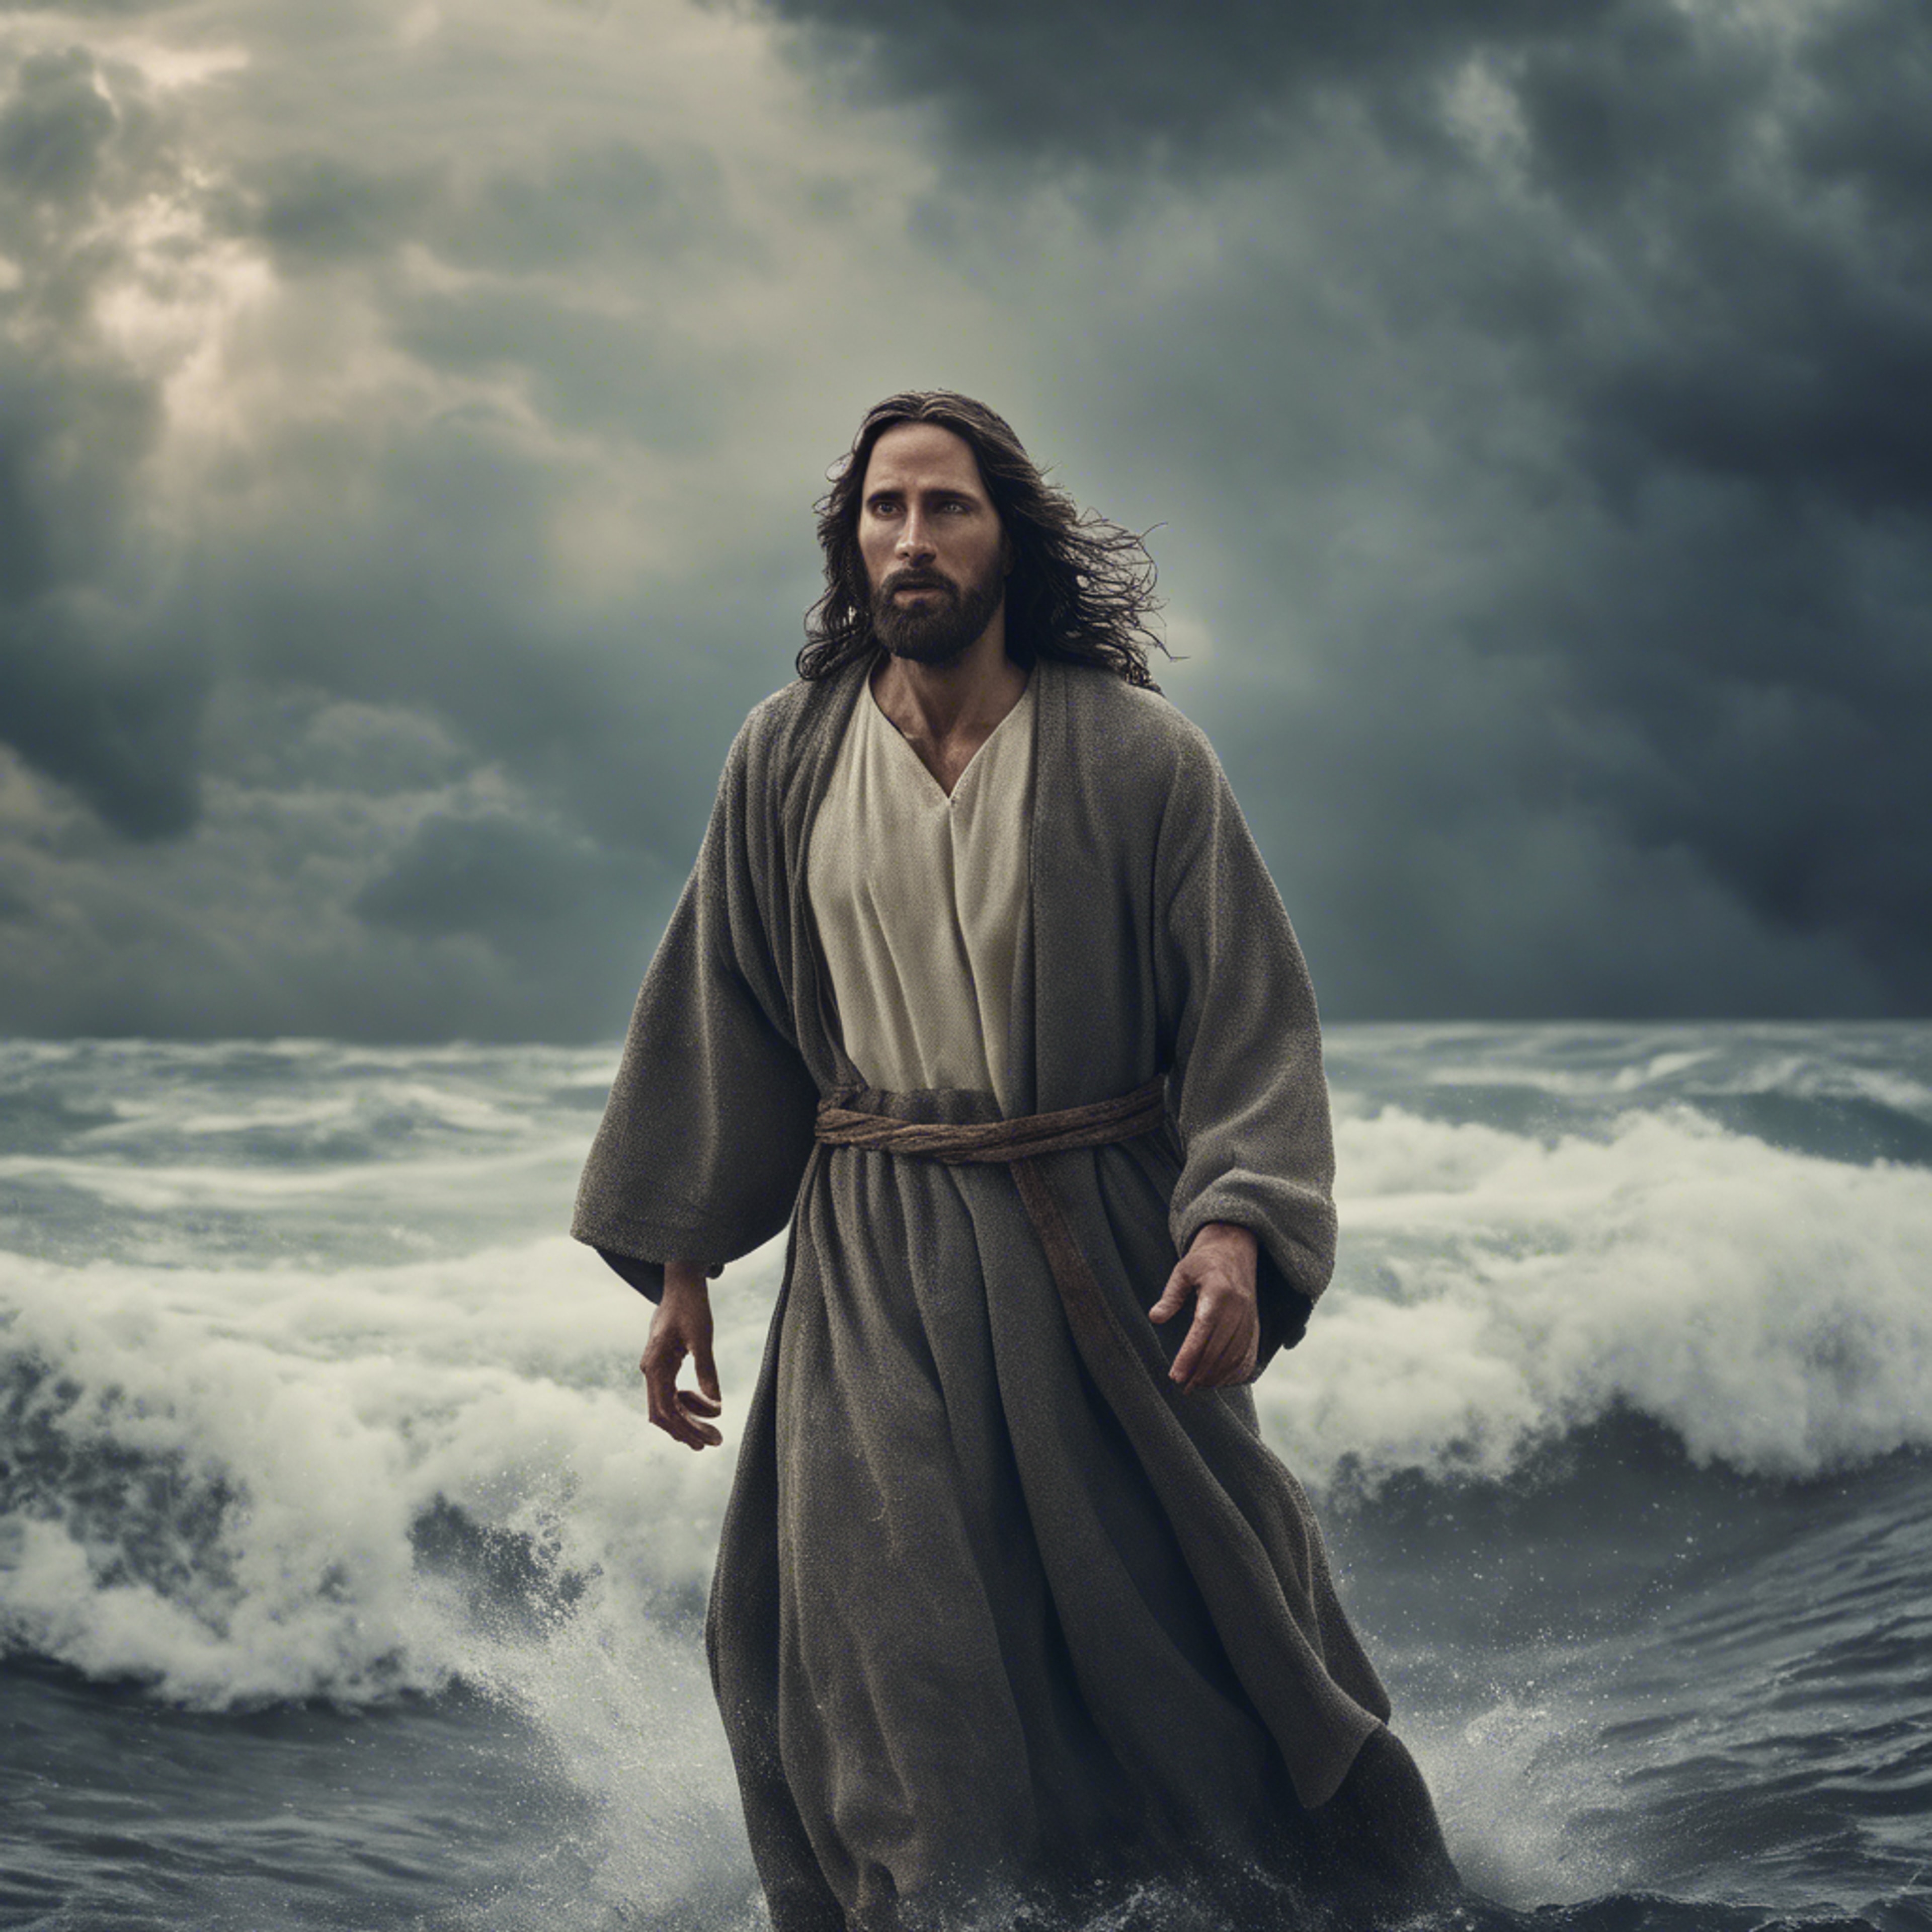 Jesus Christ calmly walking across a stormy sea under a dramatic, cloudy sky. 벽지[40d9c306725247569090]